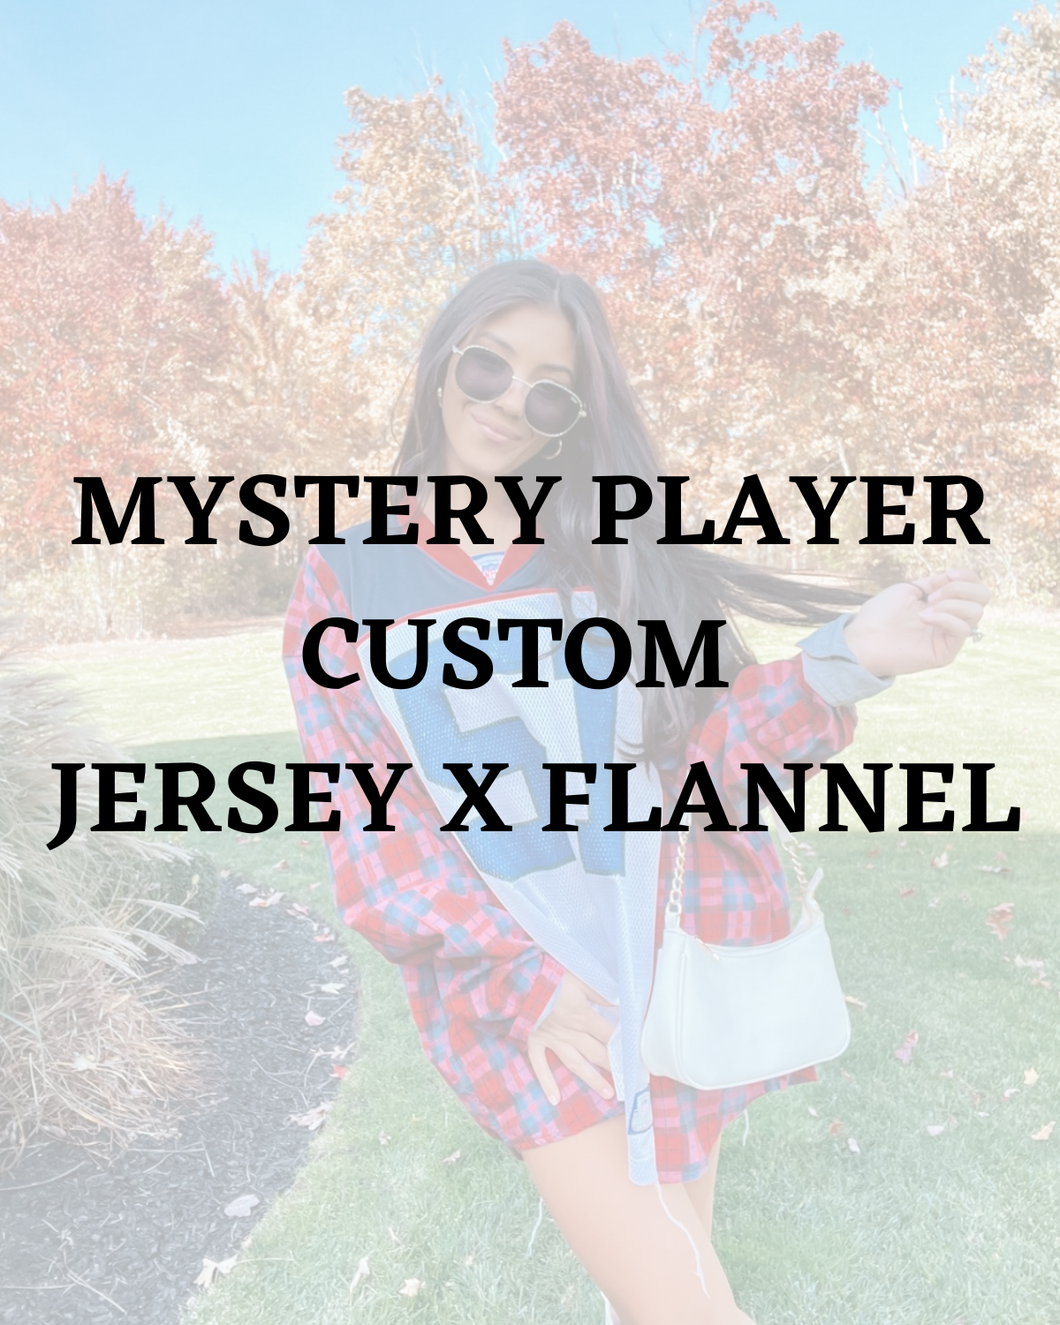 CUSTOM MYSTERY PLAYER JERSEY X FLANNEL